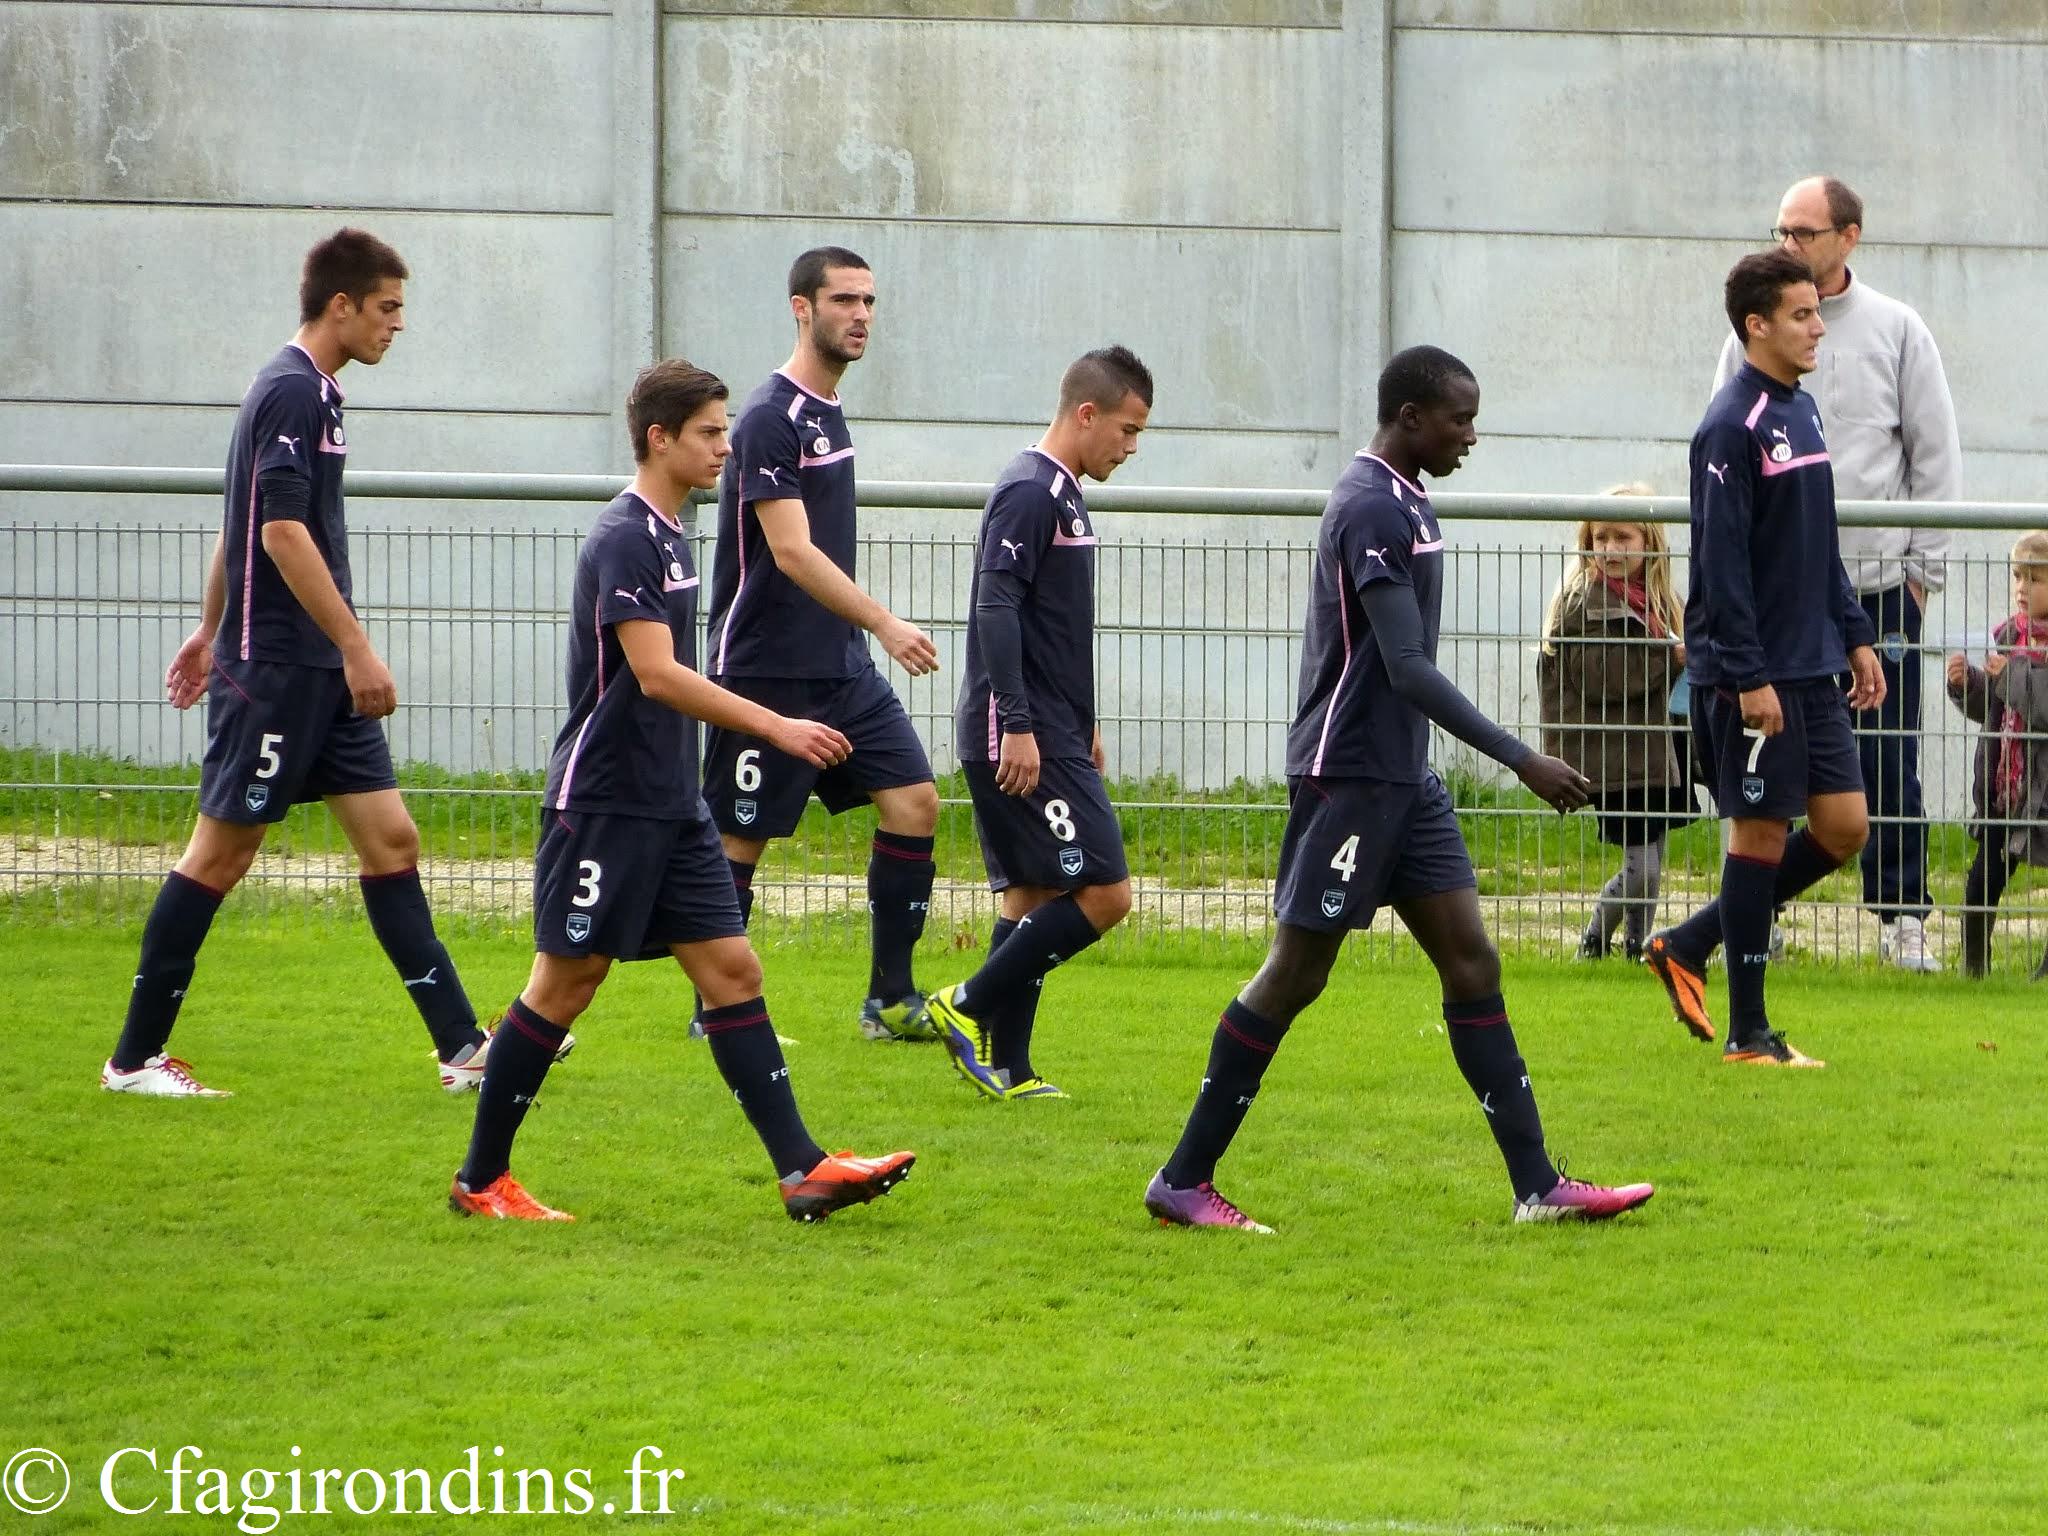 Cfa Girondins : [J10] Défaite dans le derby à Nantes (2-1) - Formation Girondins 